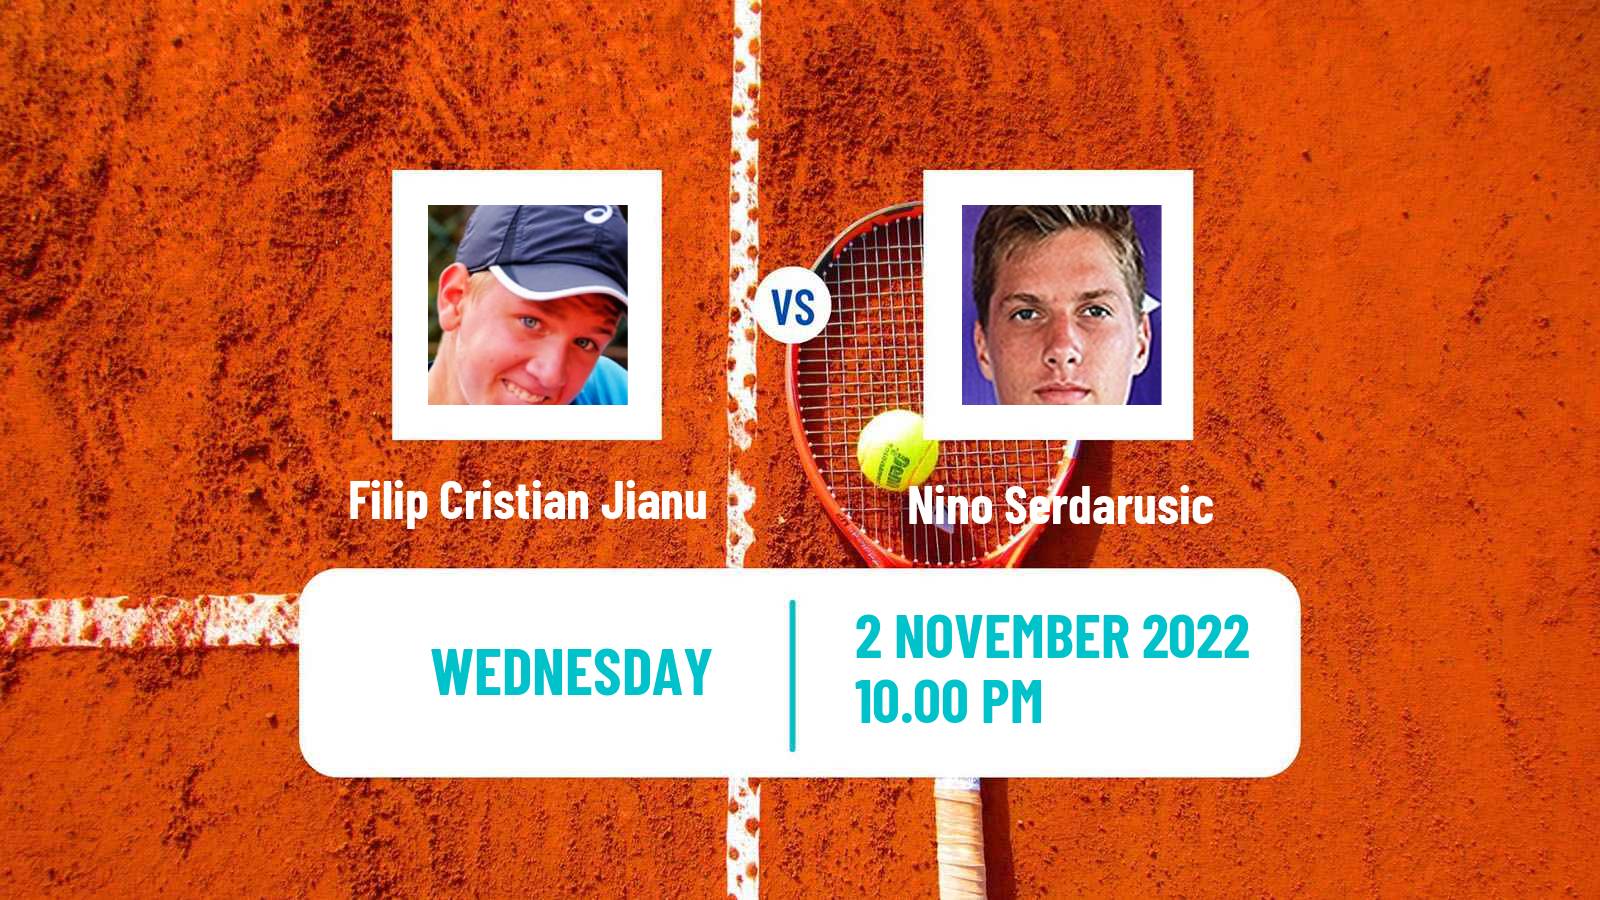 Tennis ATP Challenger Filip Cristian Jianu - Nino Serdarusic